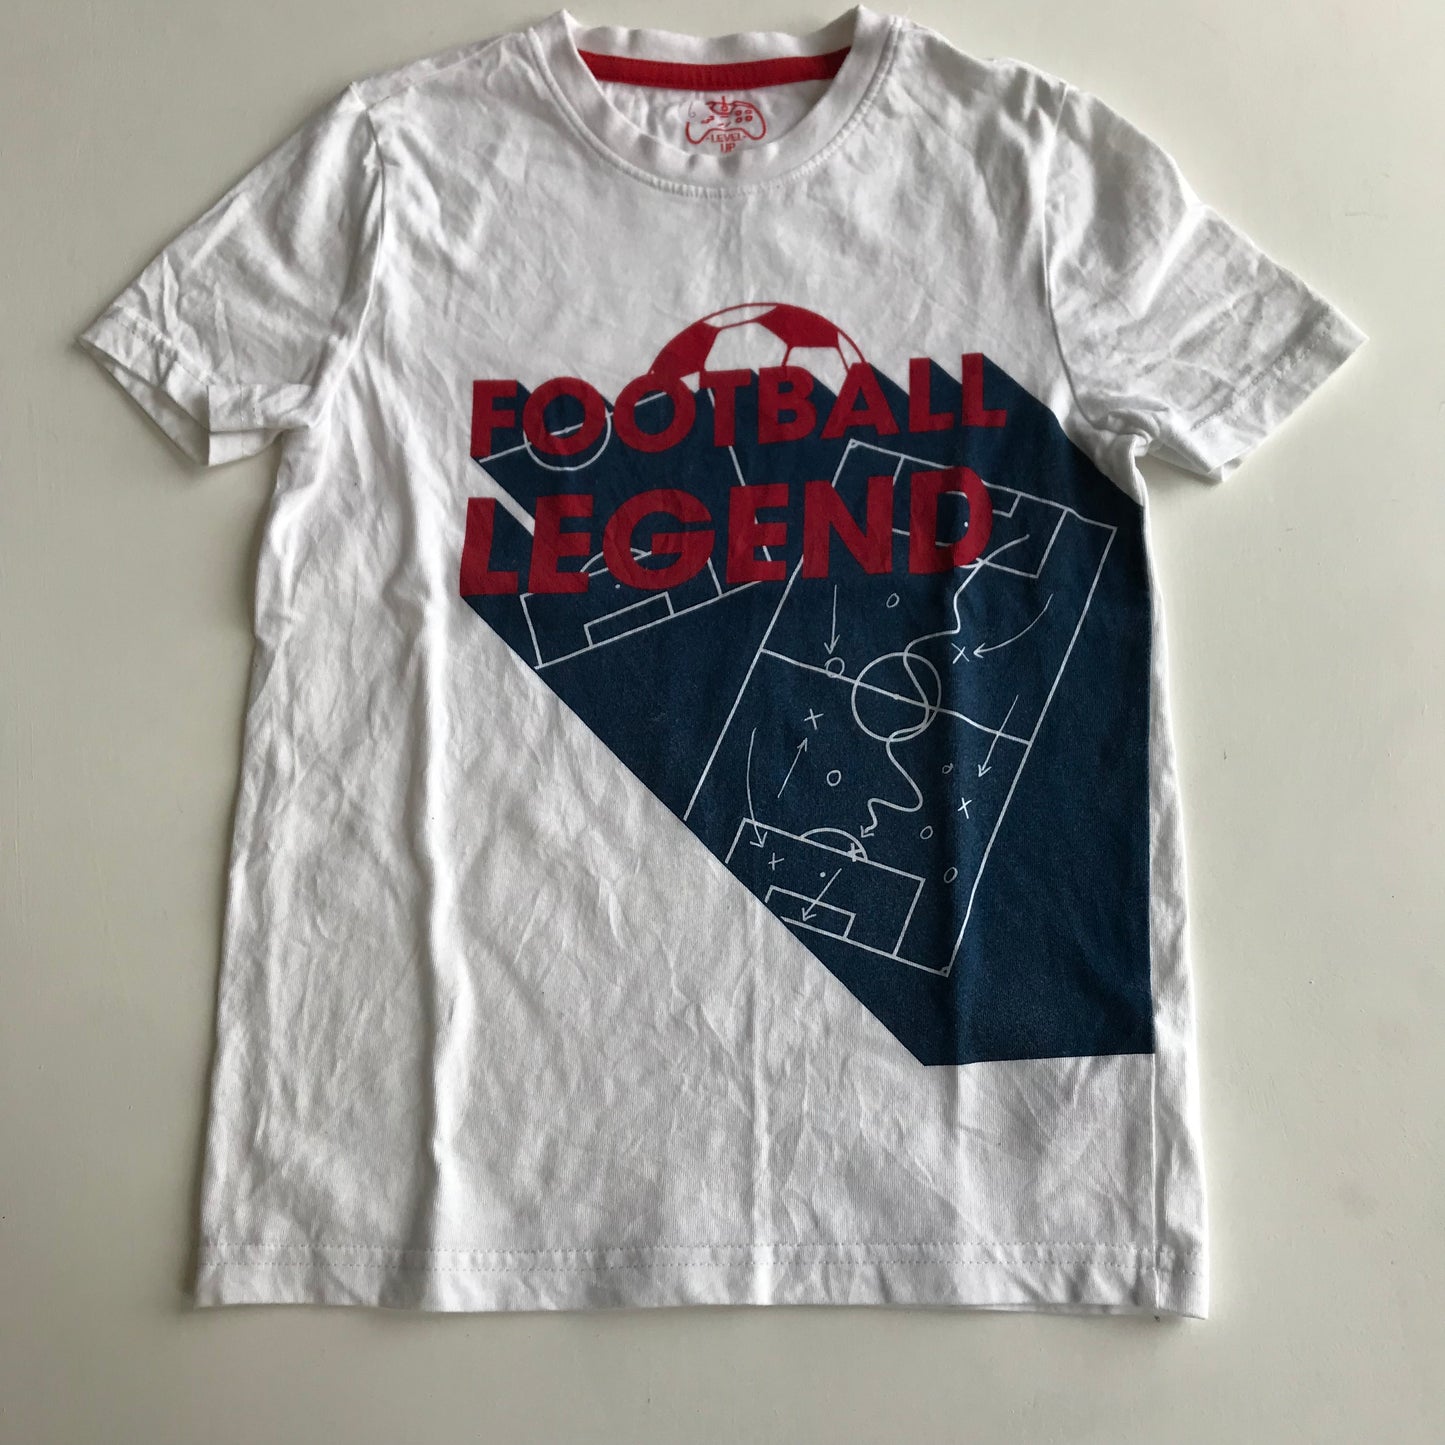 T-shirt - Football Legend - Age 6